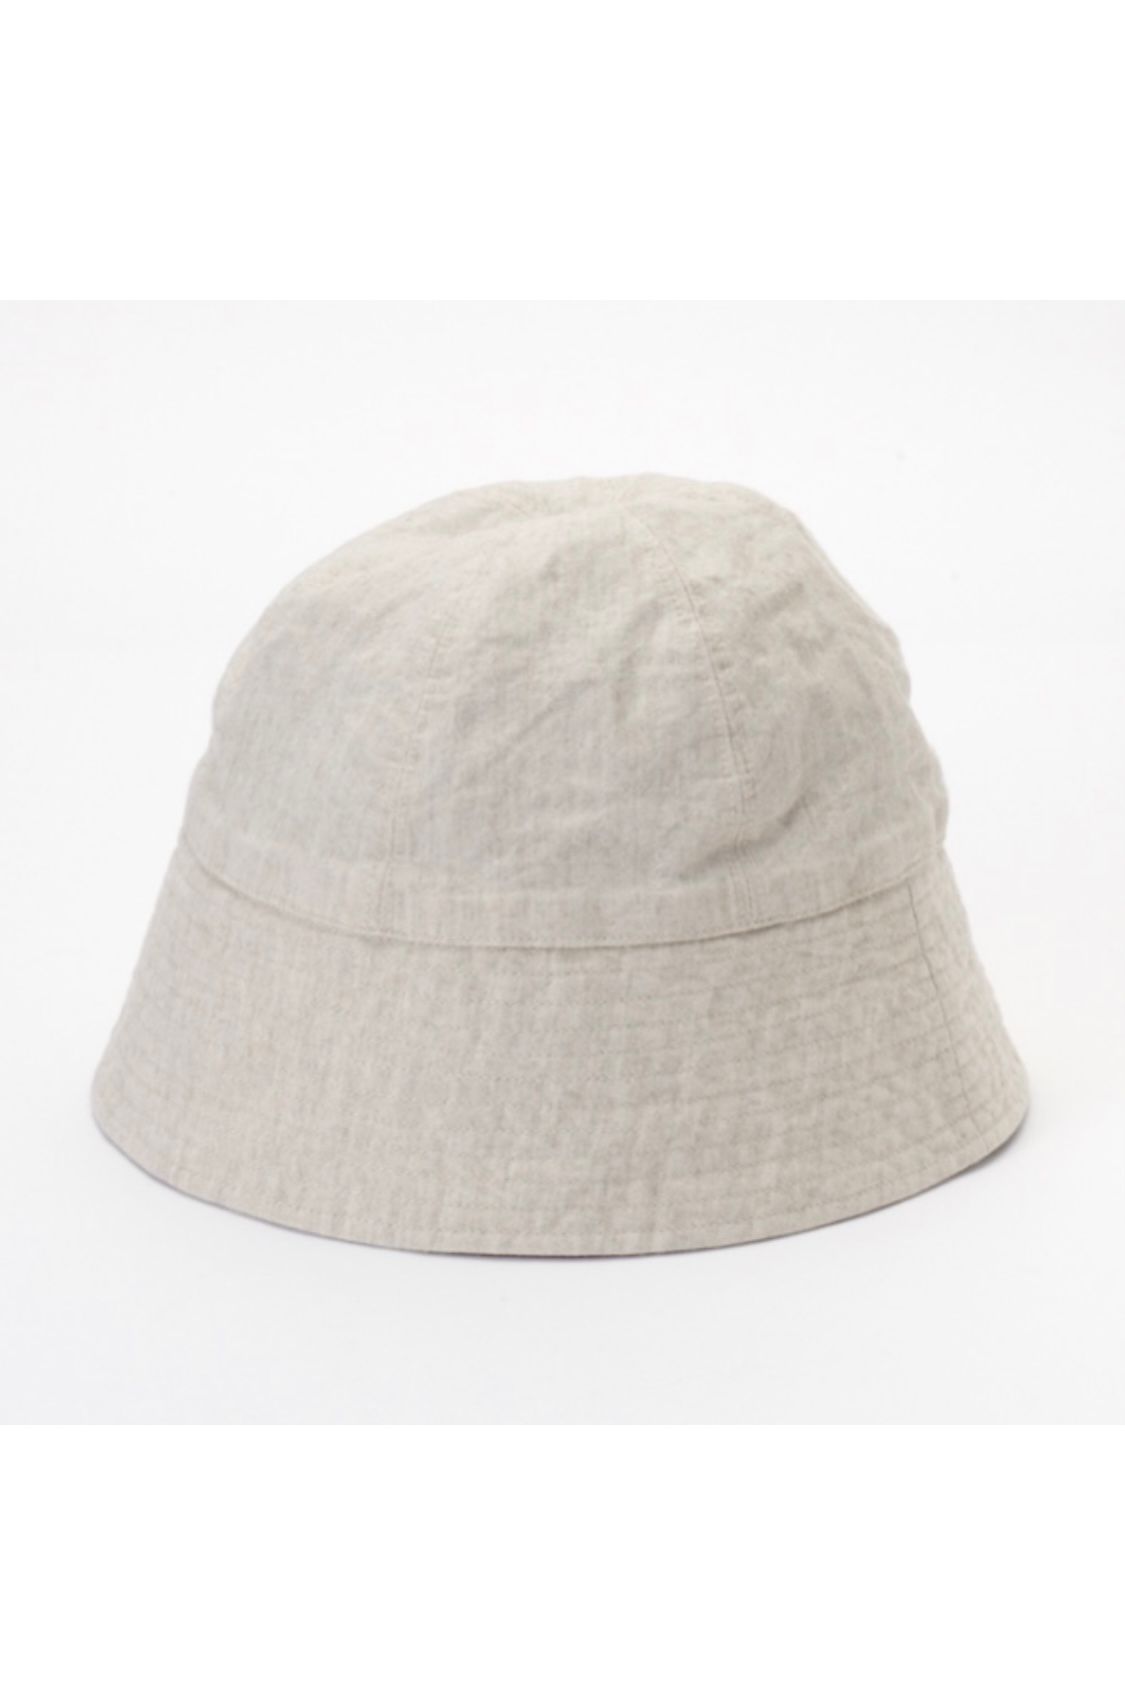 KIJIMA TAKAYUKI - paper linen sailor hat -ivory- 23ss | asterisk